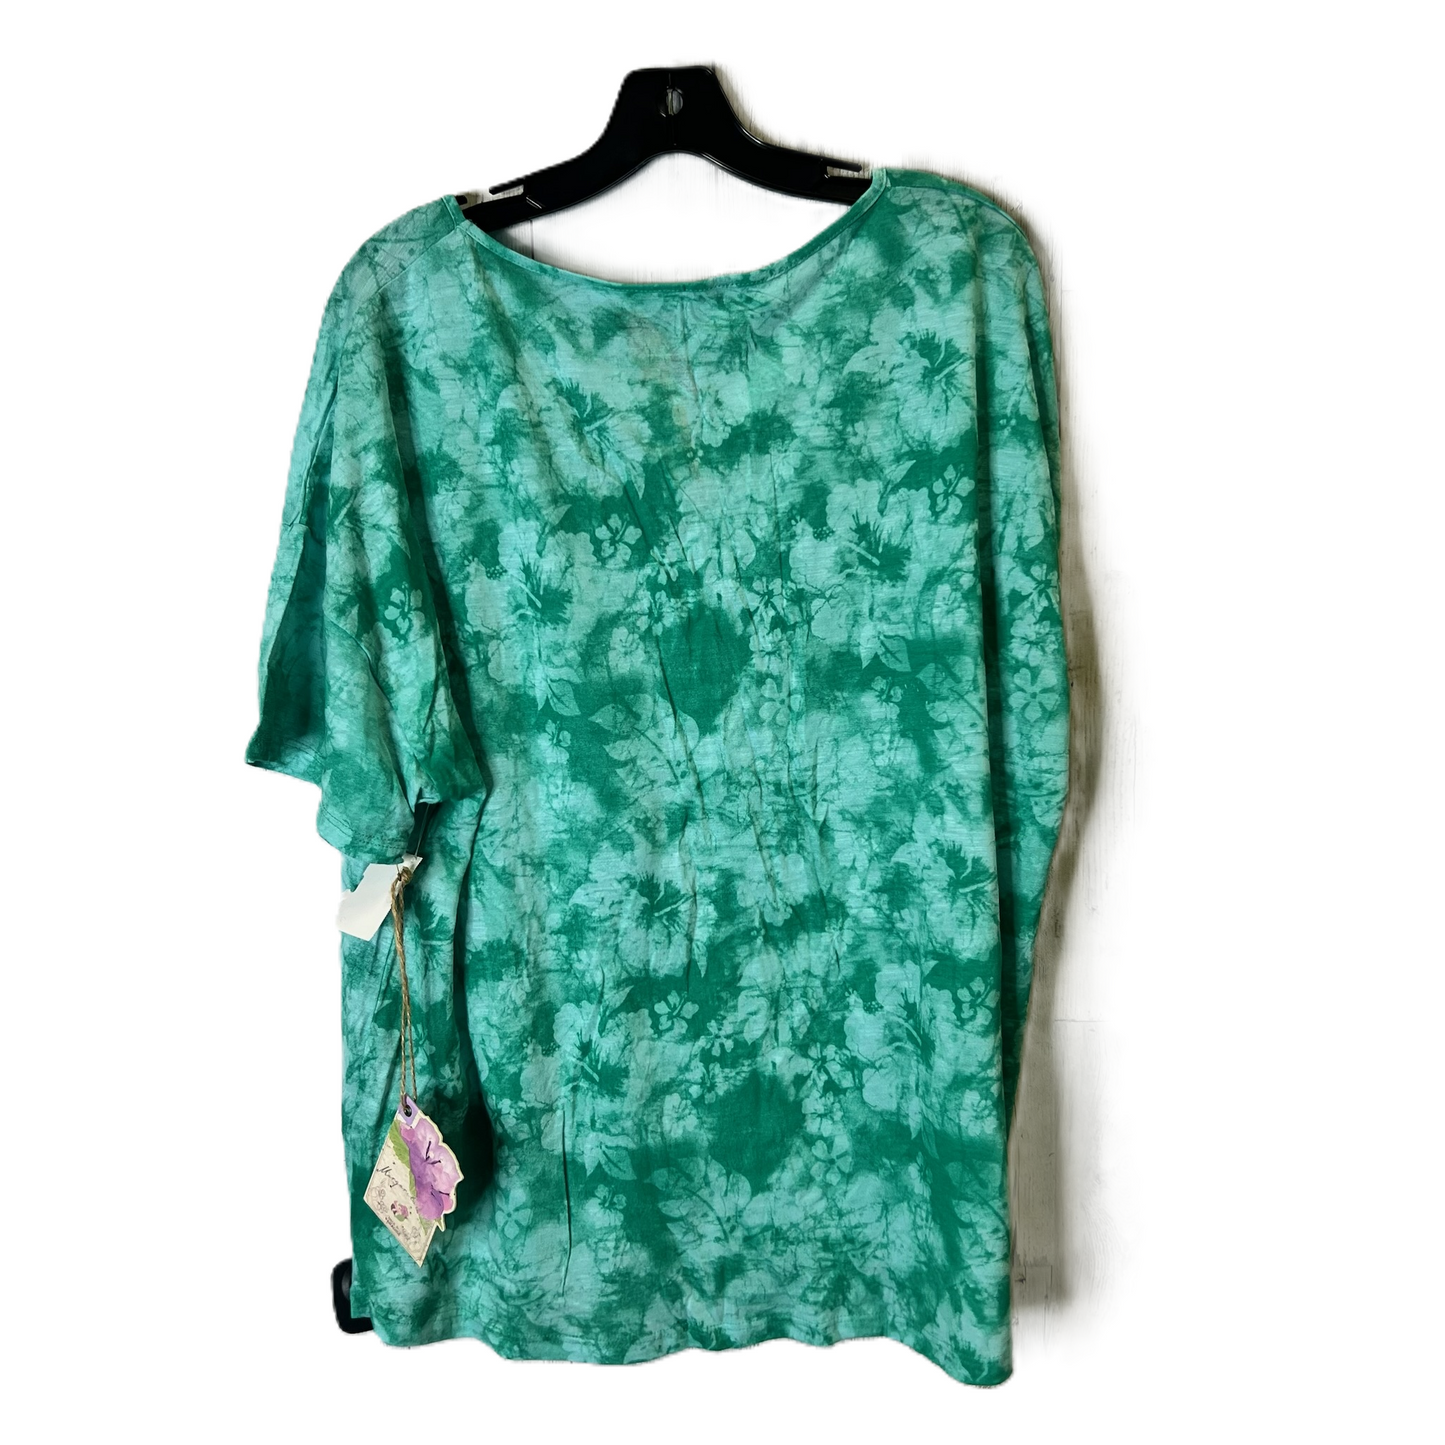 Green Top Short Sleeve Basic By Margaritaville, Size: L